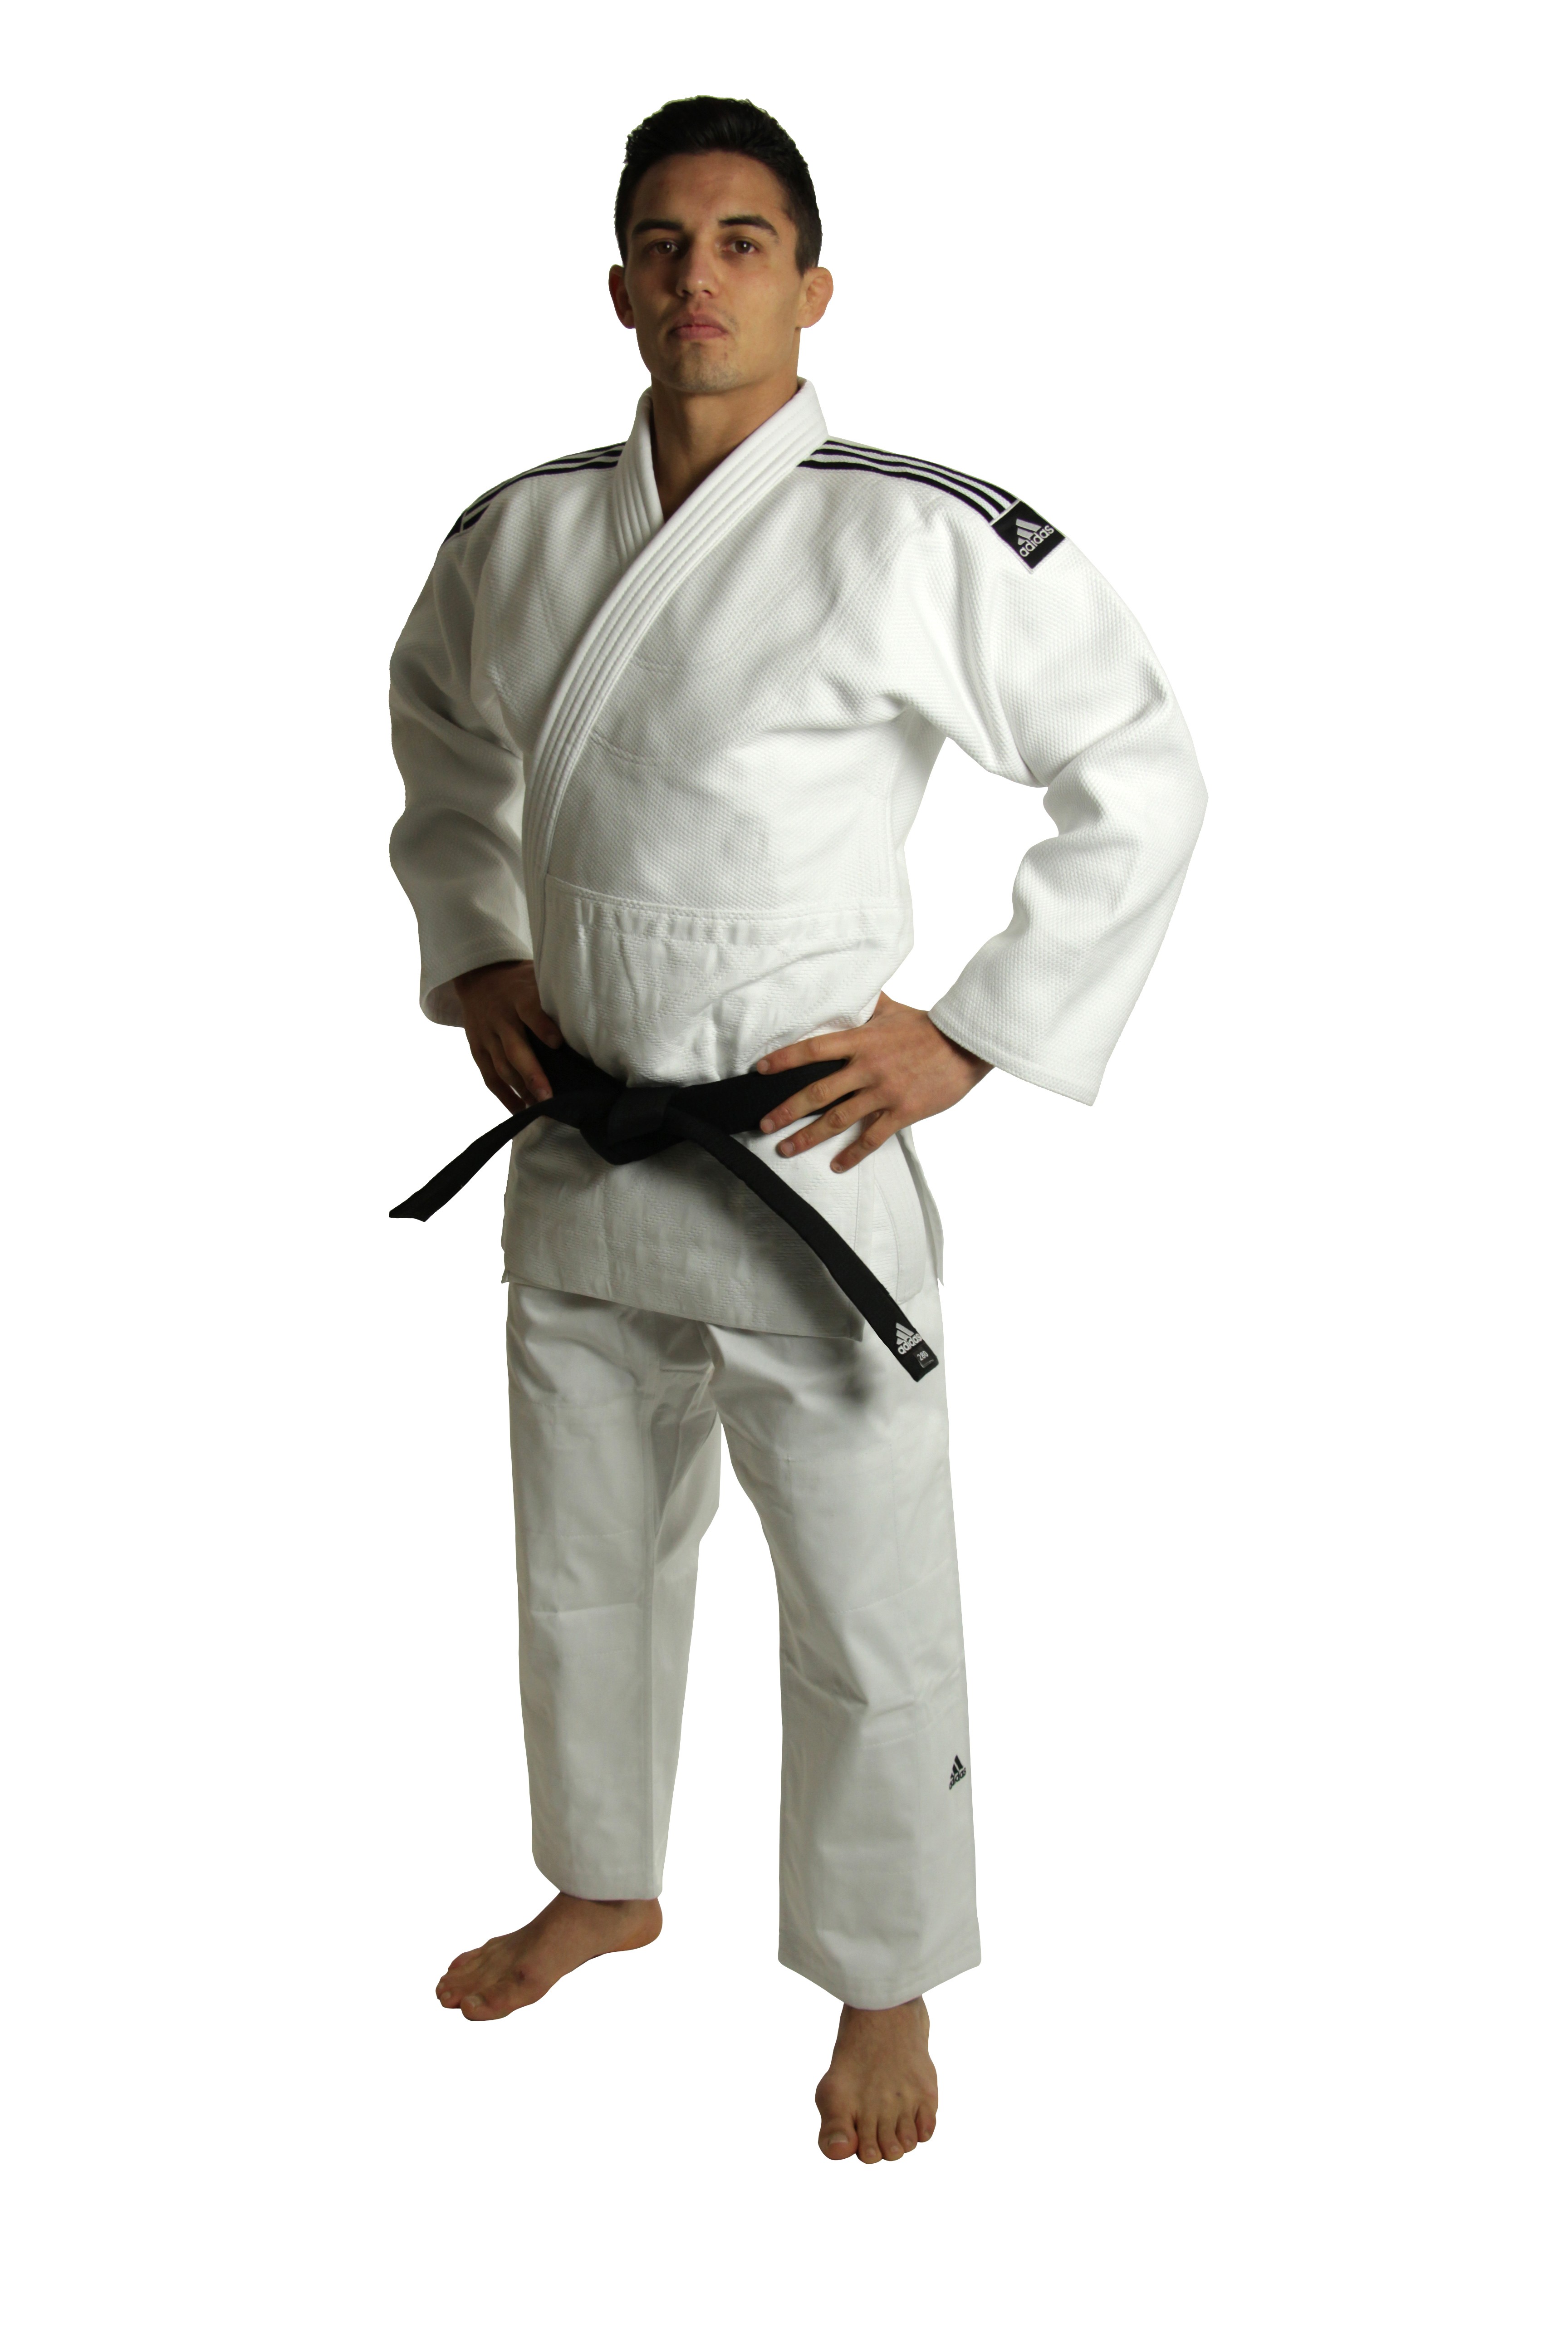 Ineenstorting Algebra consensus Kimono Judo Adidas J930, Judogi Adidas blanc: usage intensif